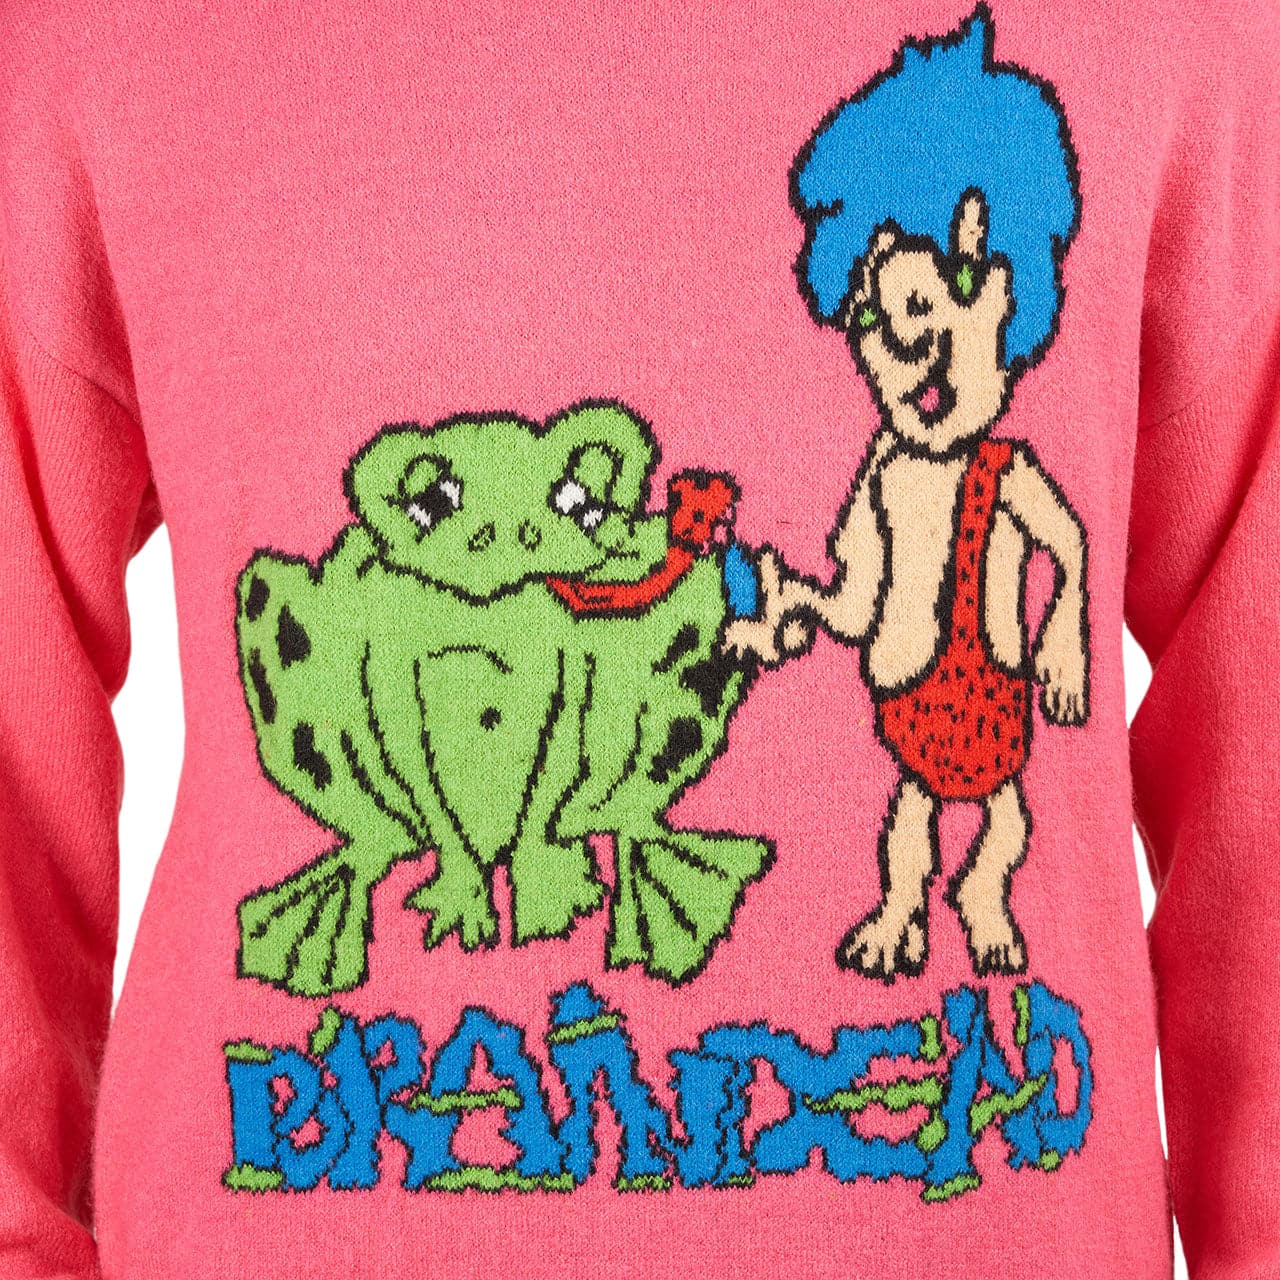 Brain Dead Buddies Sweater (Fuchsia)  - Allike Store